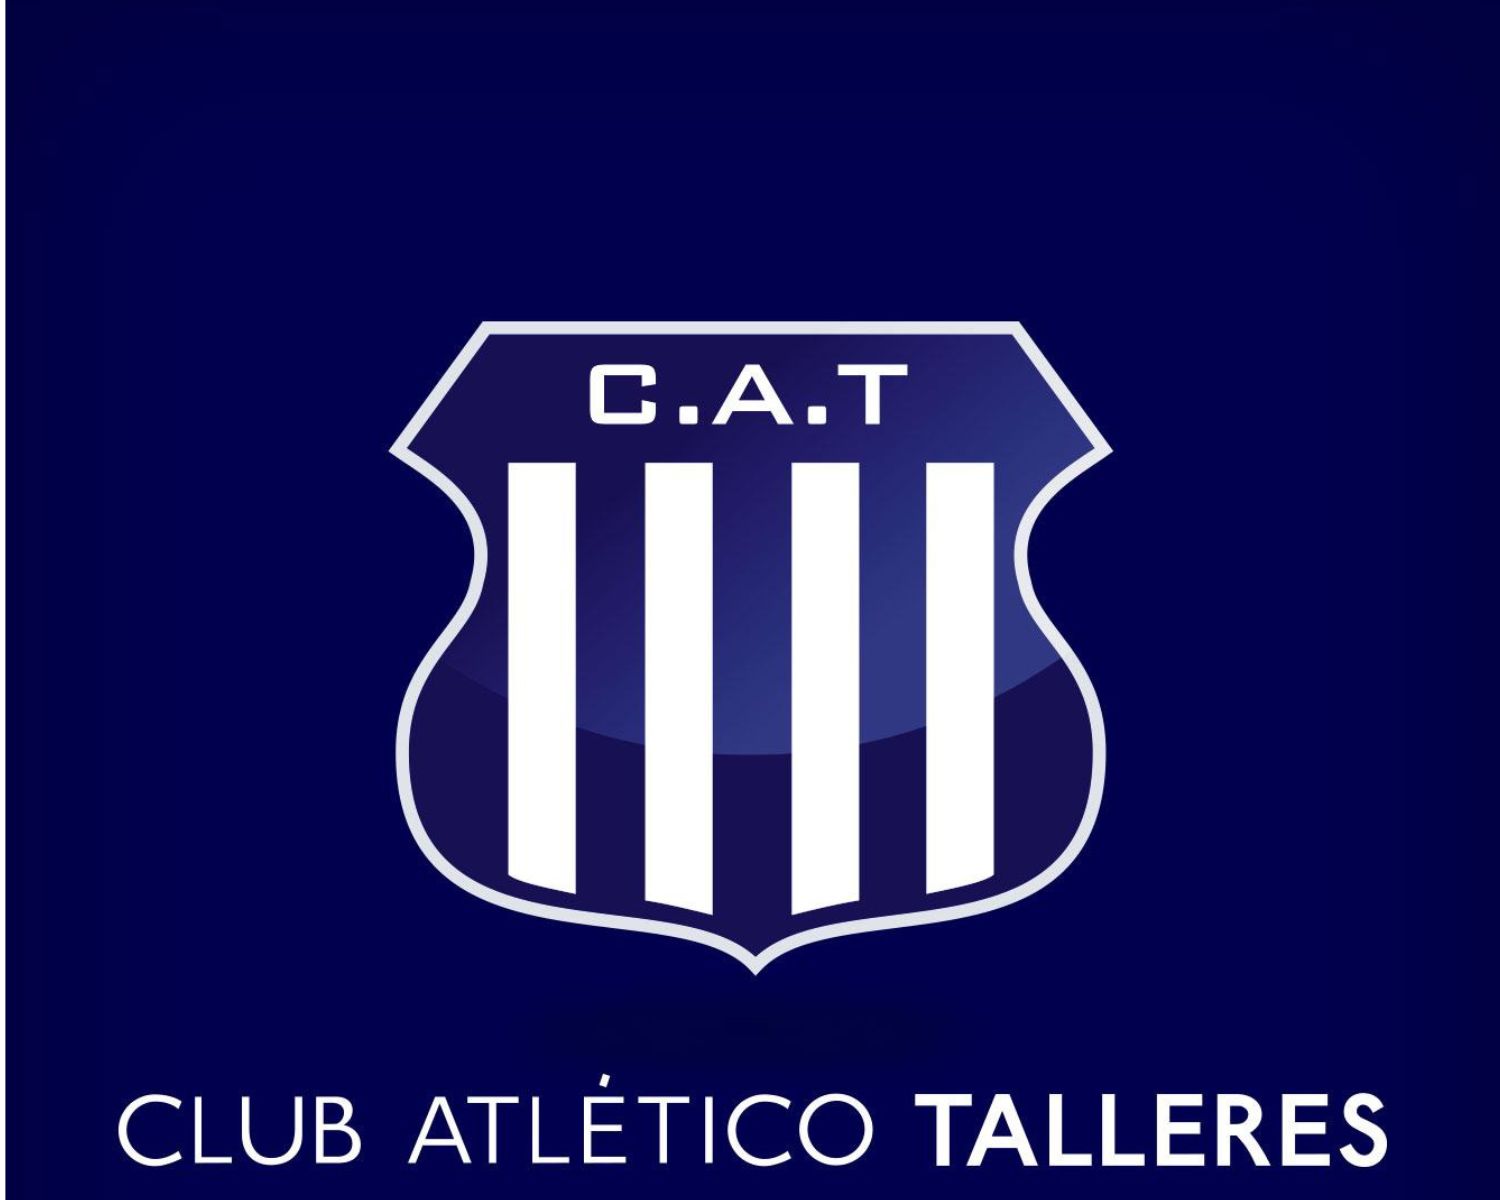 Club Atlético Talleres